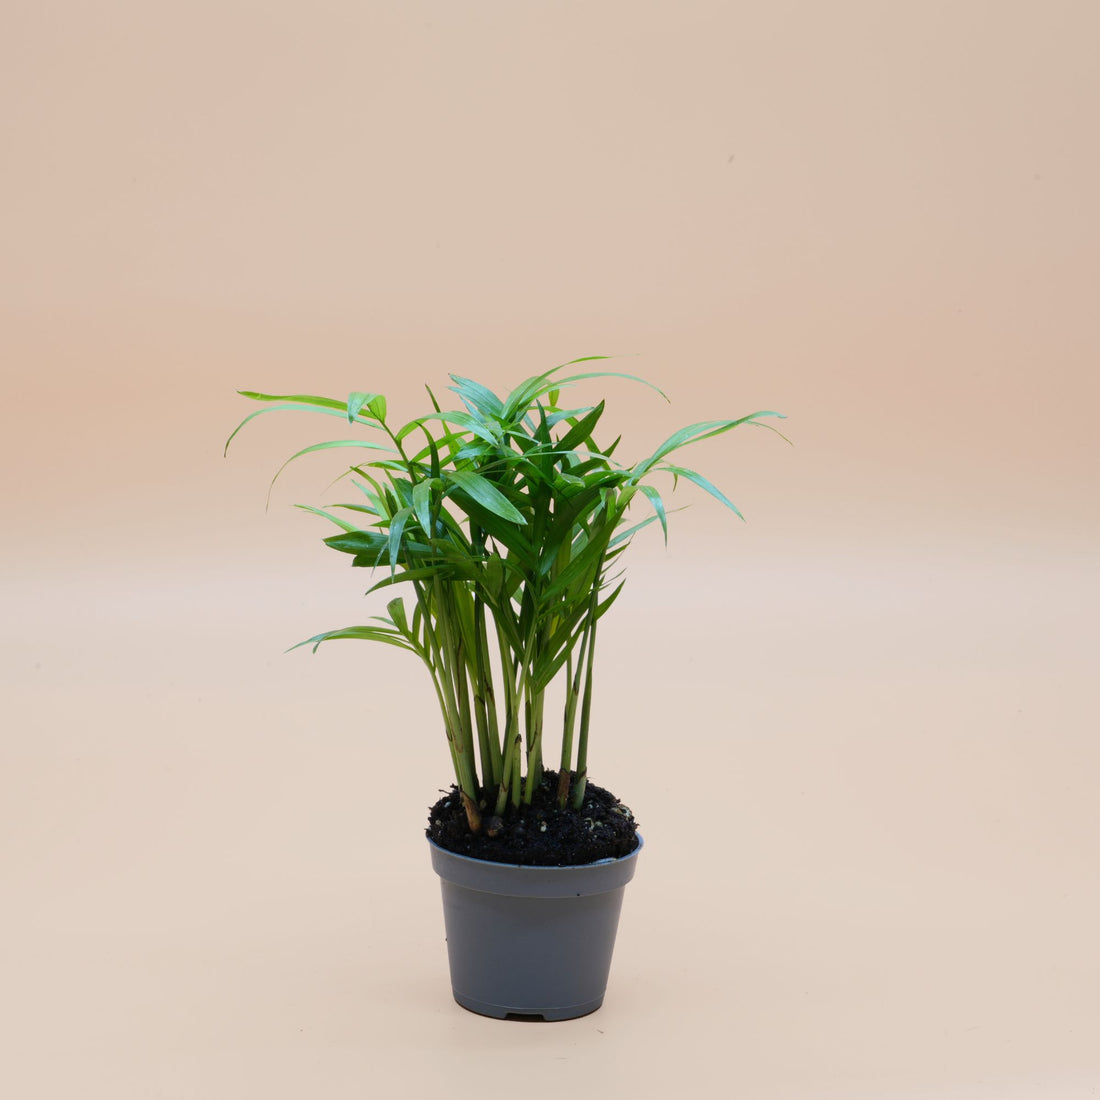 Chamaedorea Elegans ◦ Parlour Palm ◦ Terrarium Plant